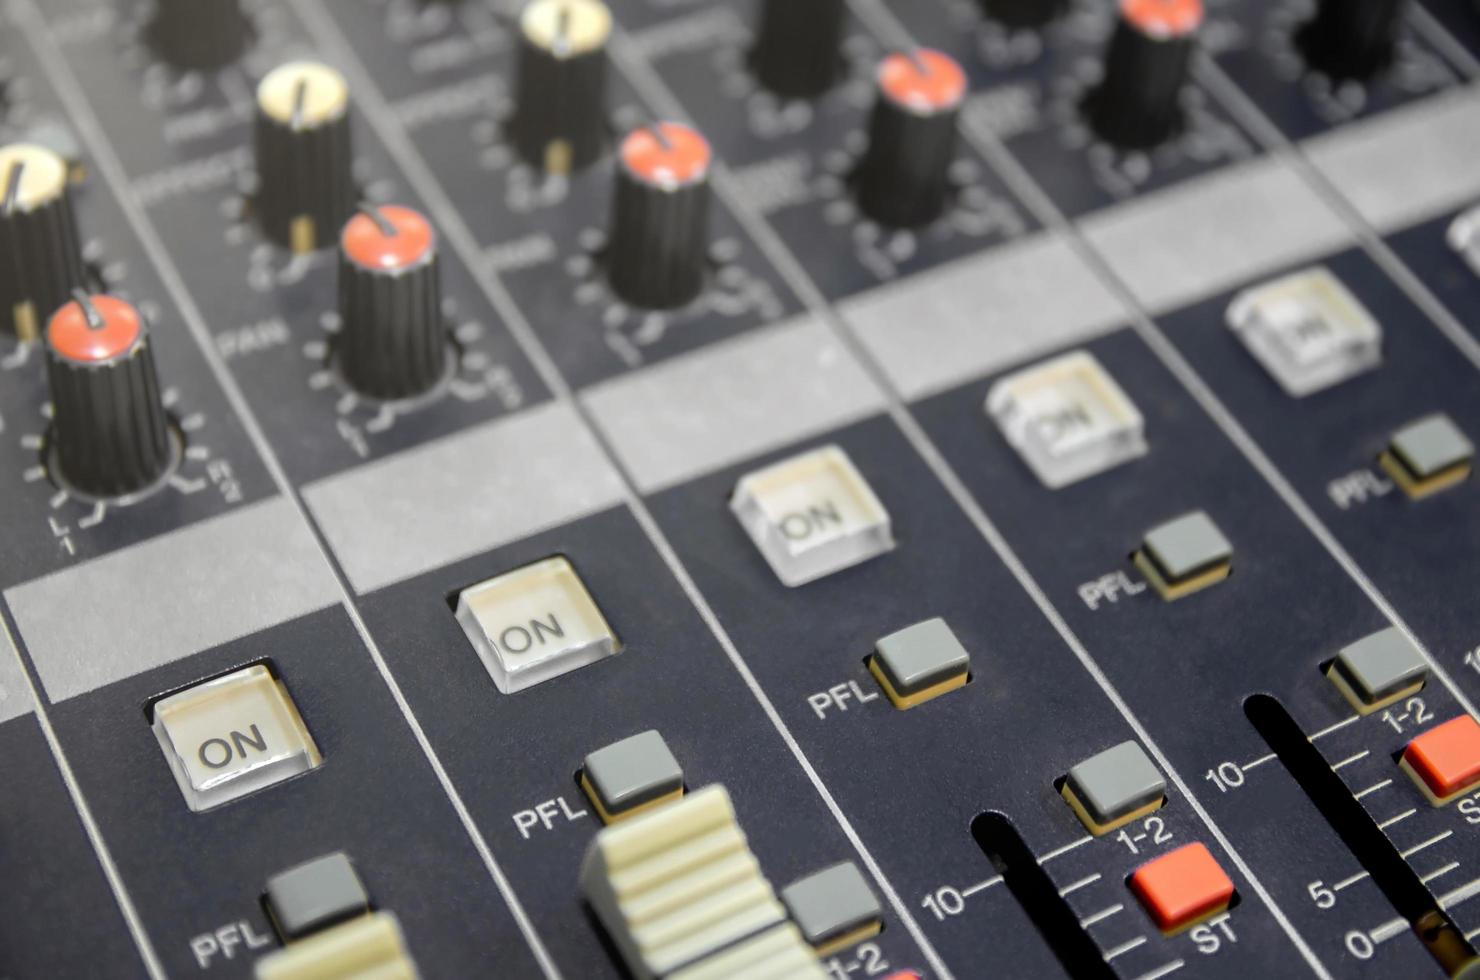 Recording Studio Mixing Desk with Mixer Control Desk Slider Stock